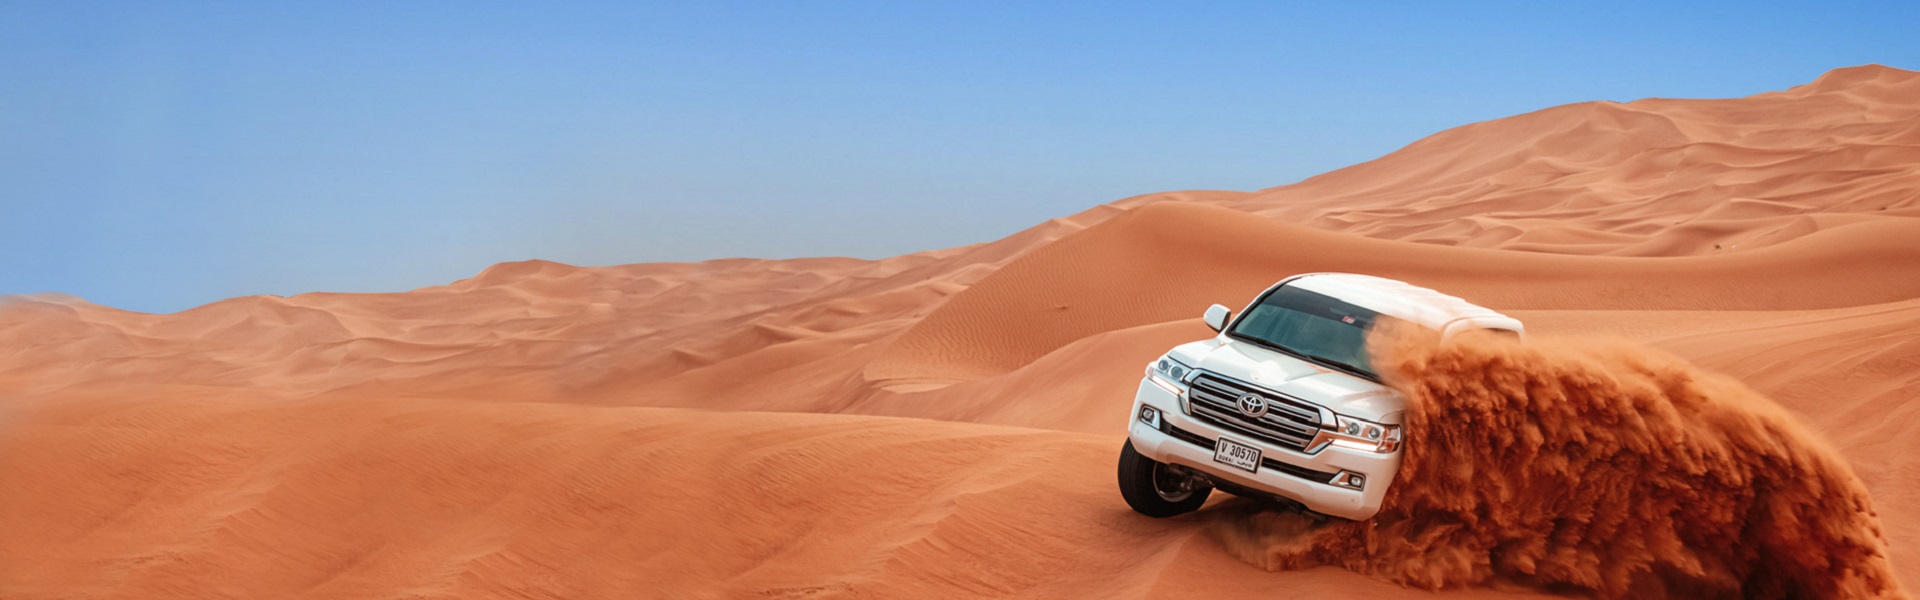 FIAT delovi |  Desert safari in Dubai